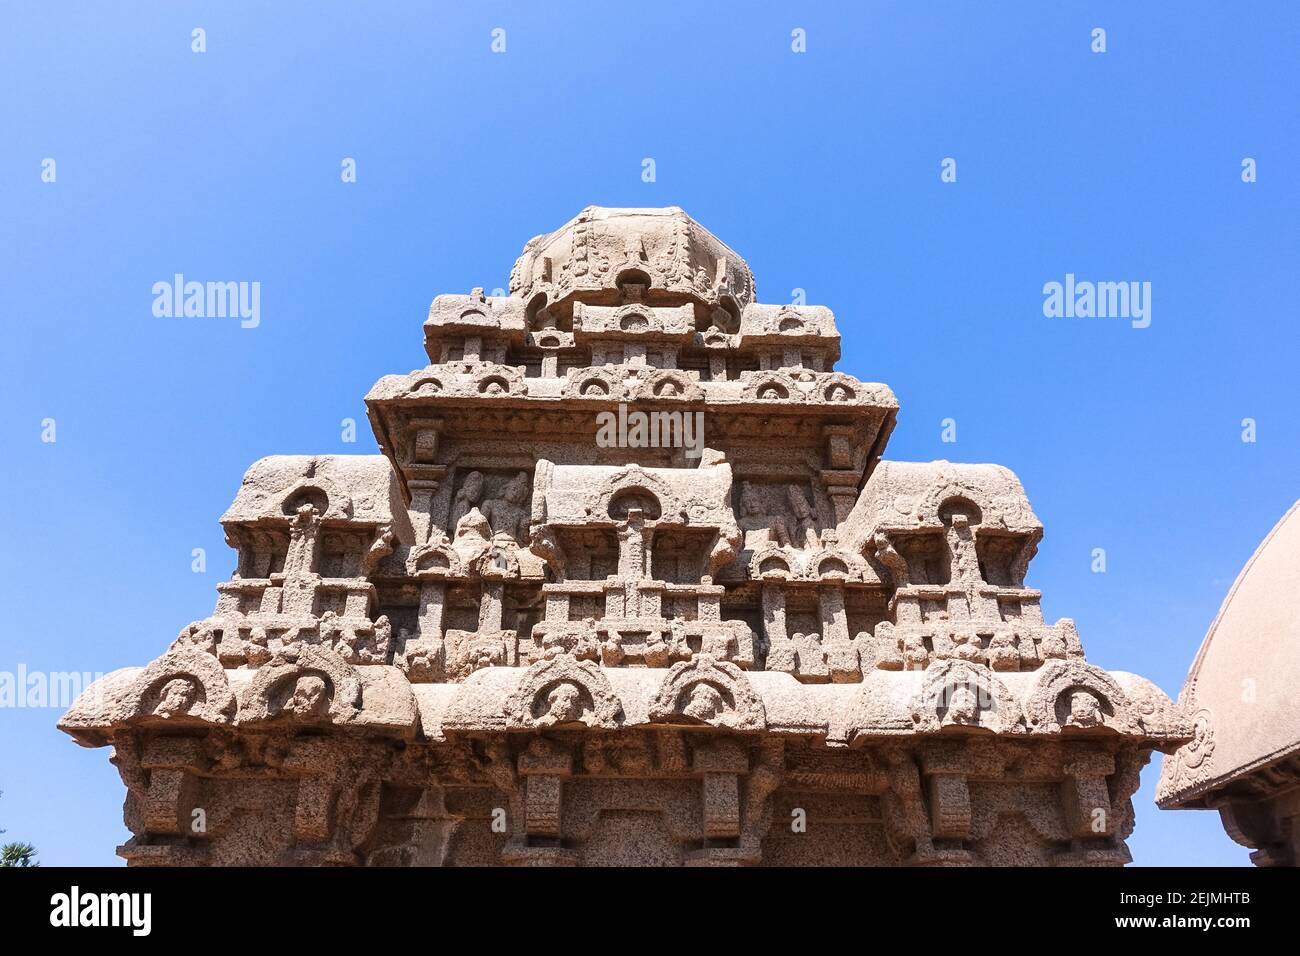 Architettura monolitica indiana scavata nella roccia chiamata Arjuna Ratha al complesso Pancha ratha a Mahabalipuram, Tamil Nadu, India Foto Stock